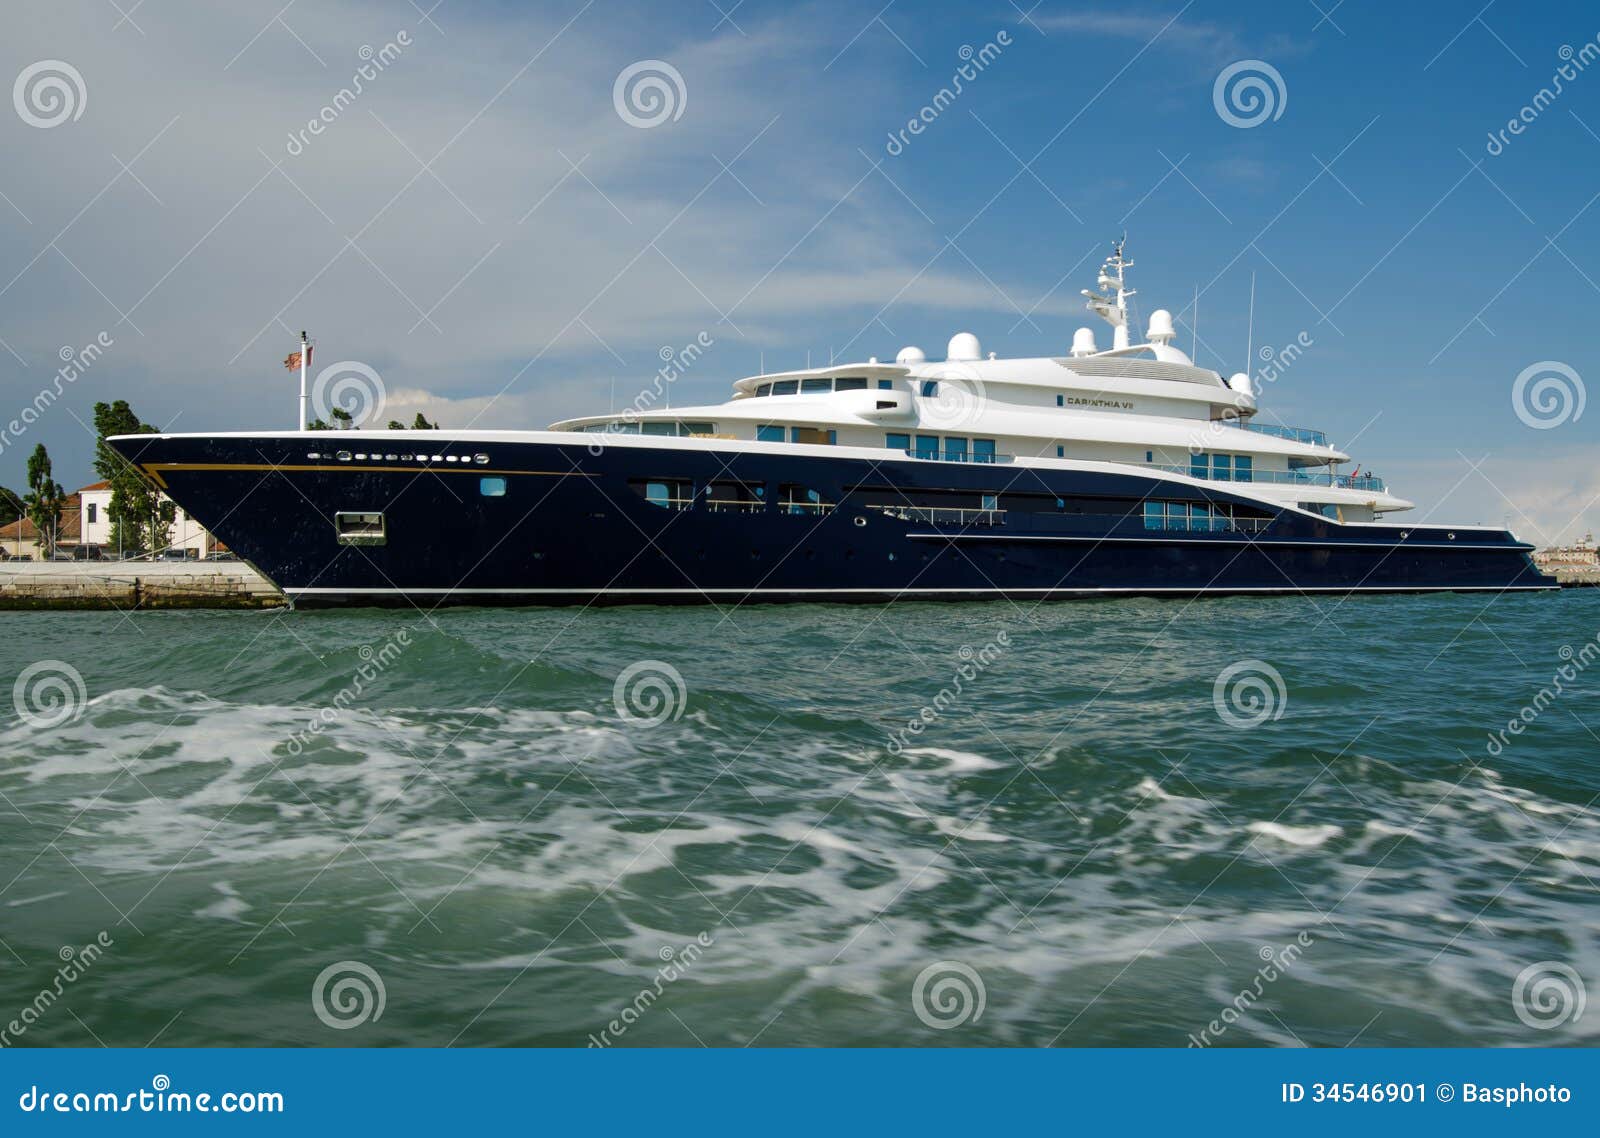 Carinthia VII Yacht, Venice Editorial Photo - Image: 34546901